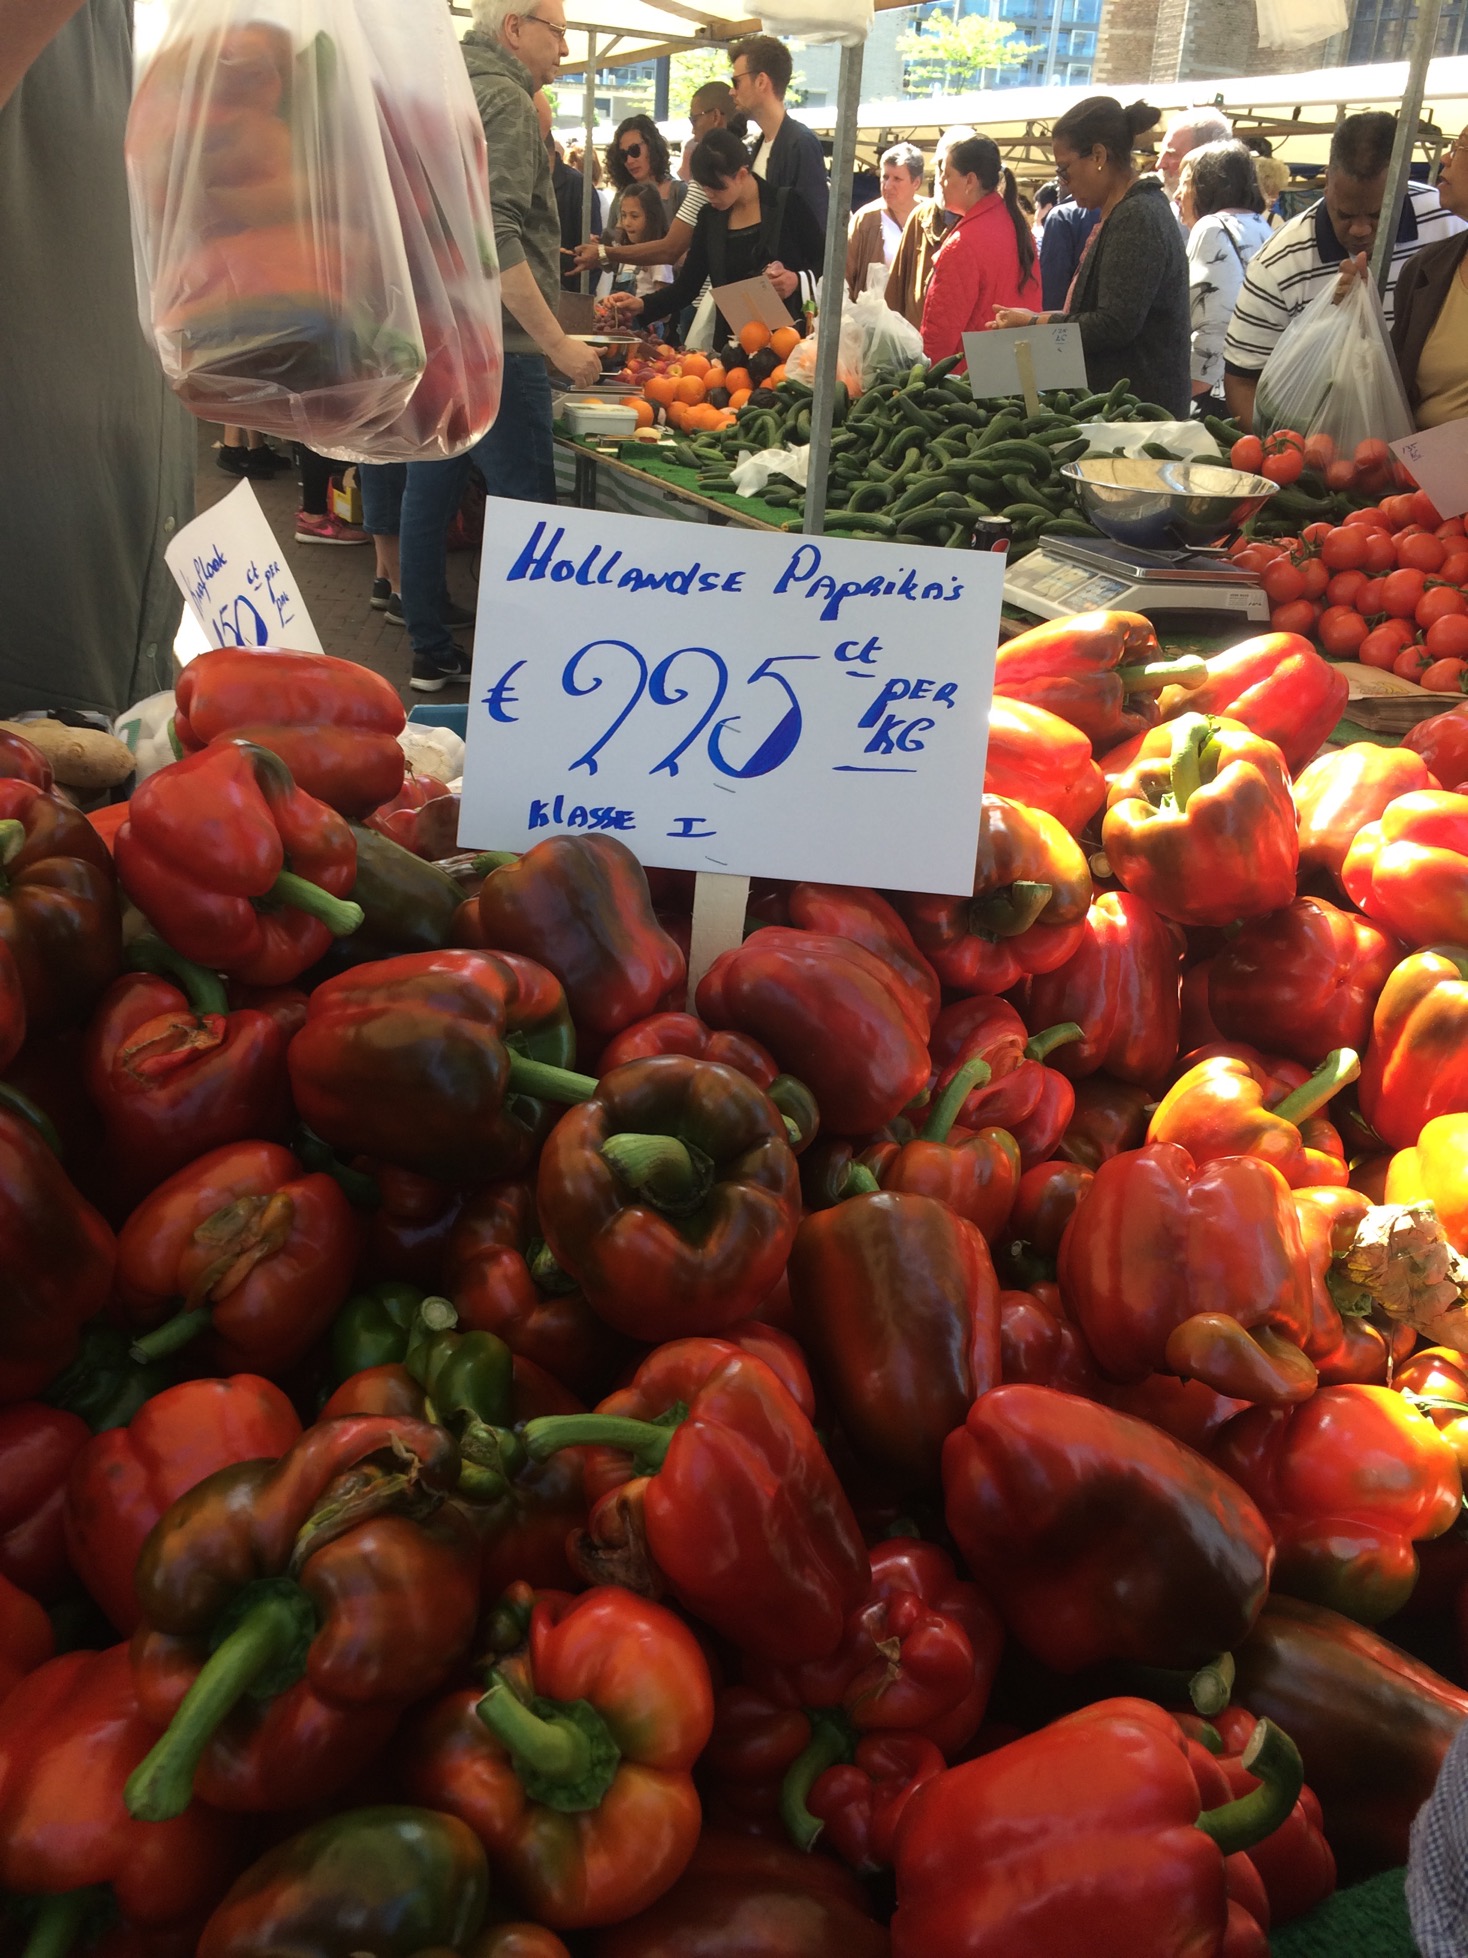 Rotterdam market, the Netherlands